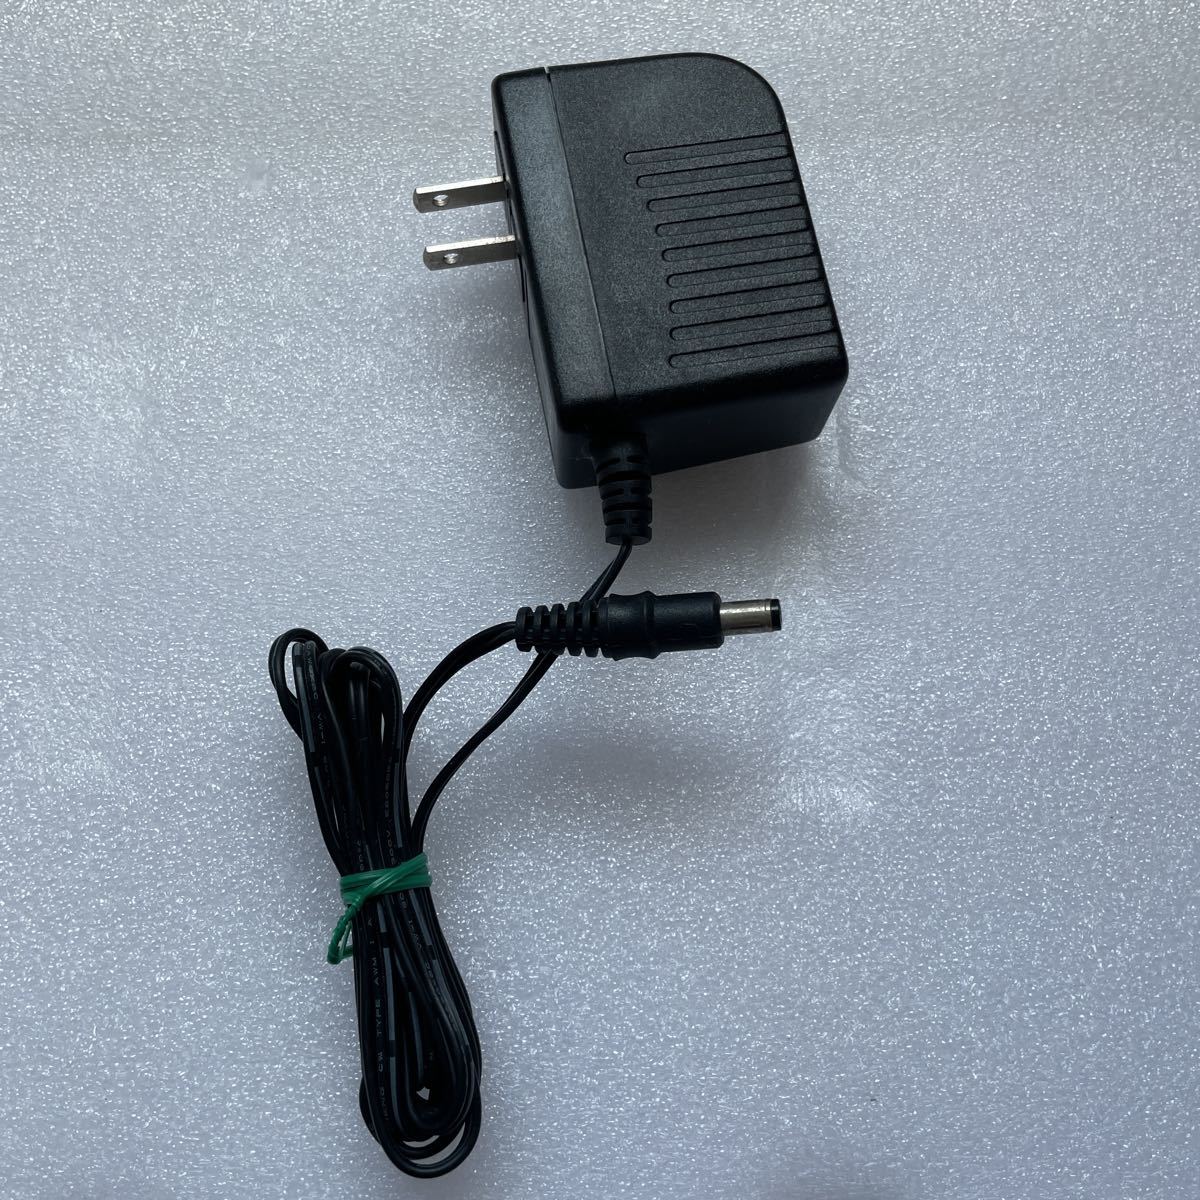 XL5964 BUFFALO AC adapter WA-24C12U 12V 2A electrification verification settled postage 520 jpy 